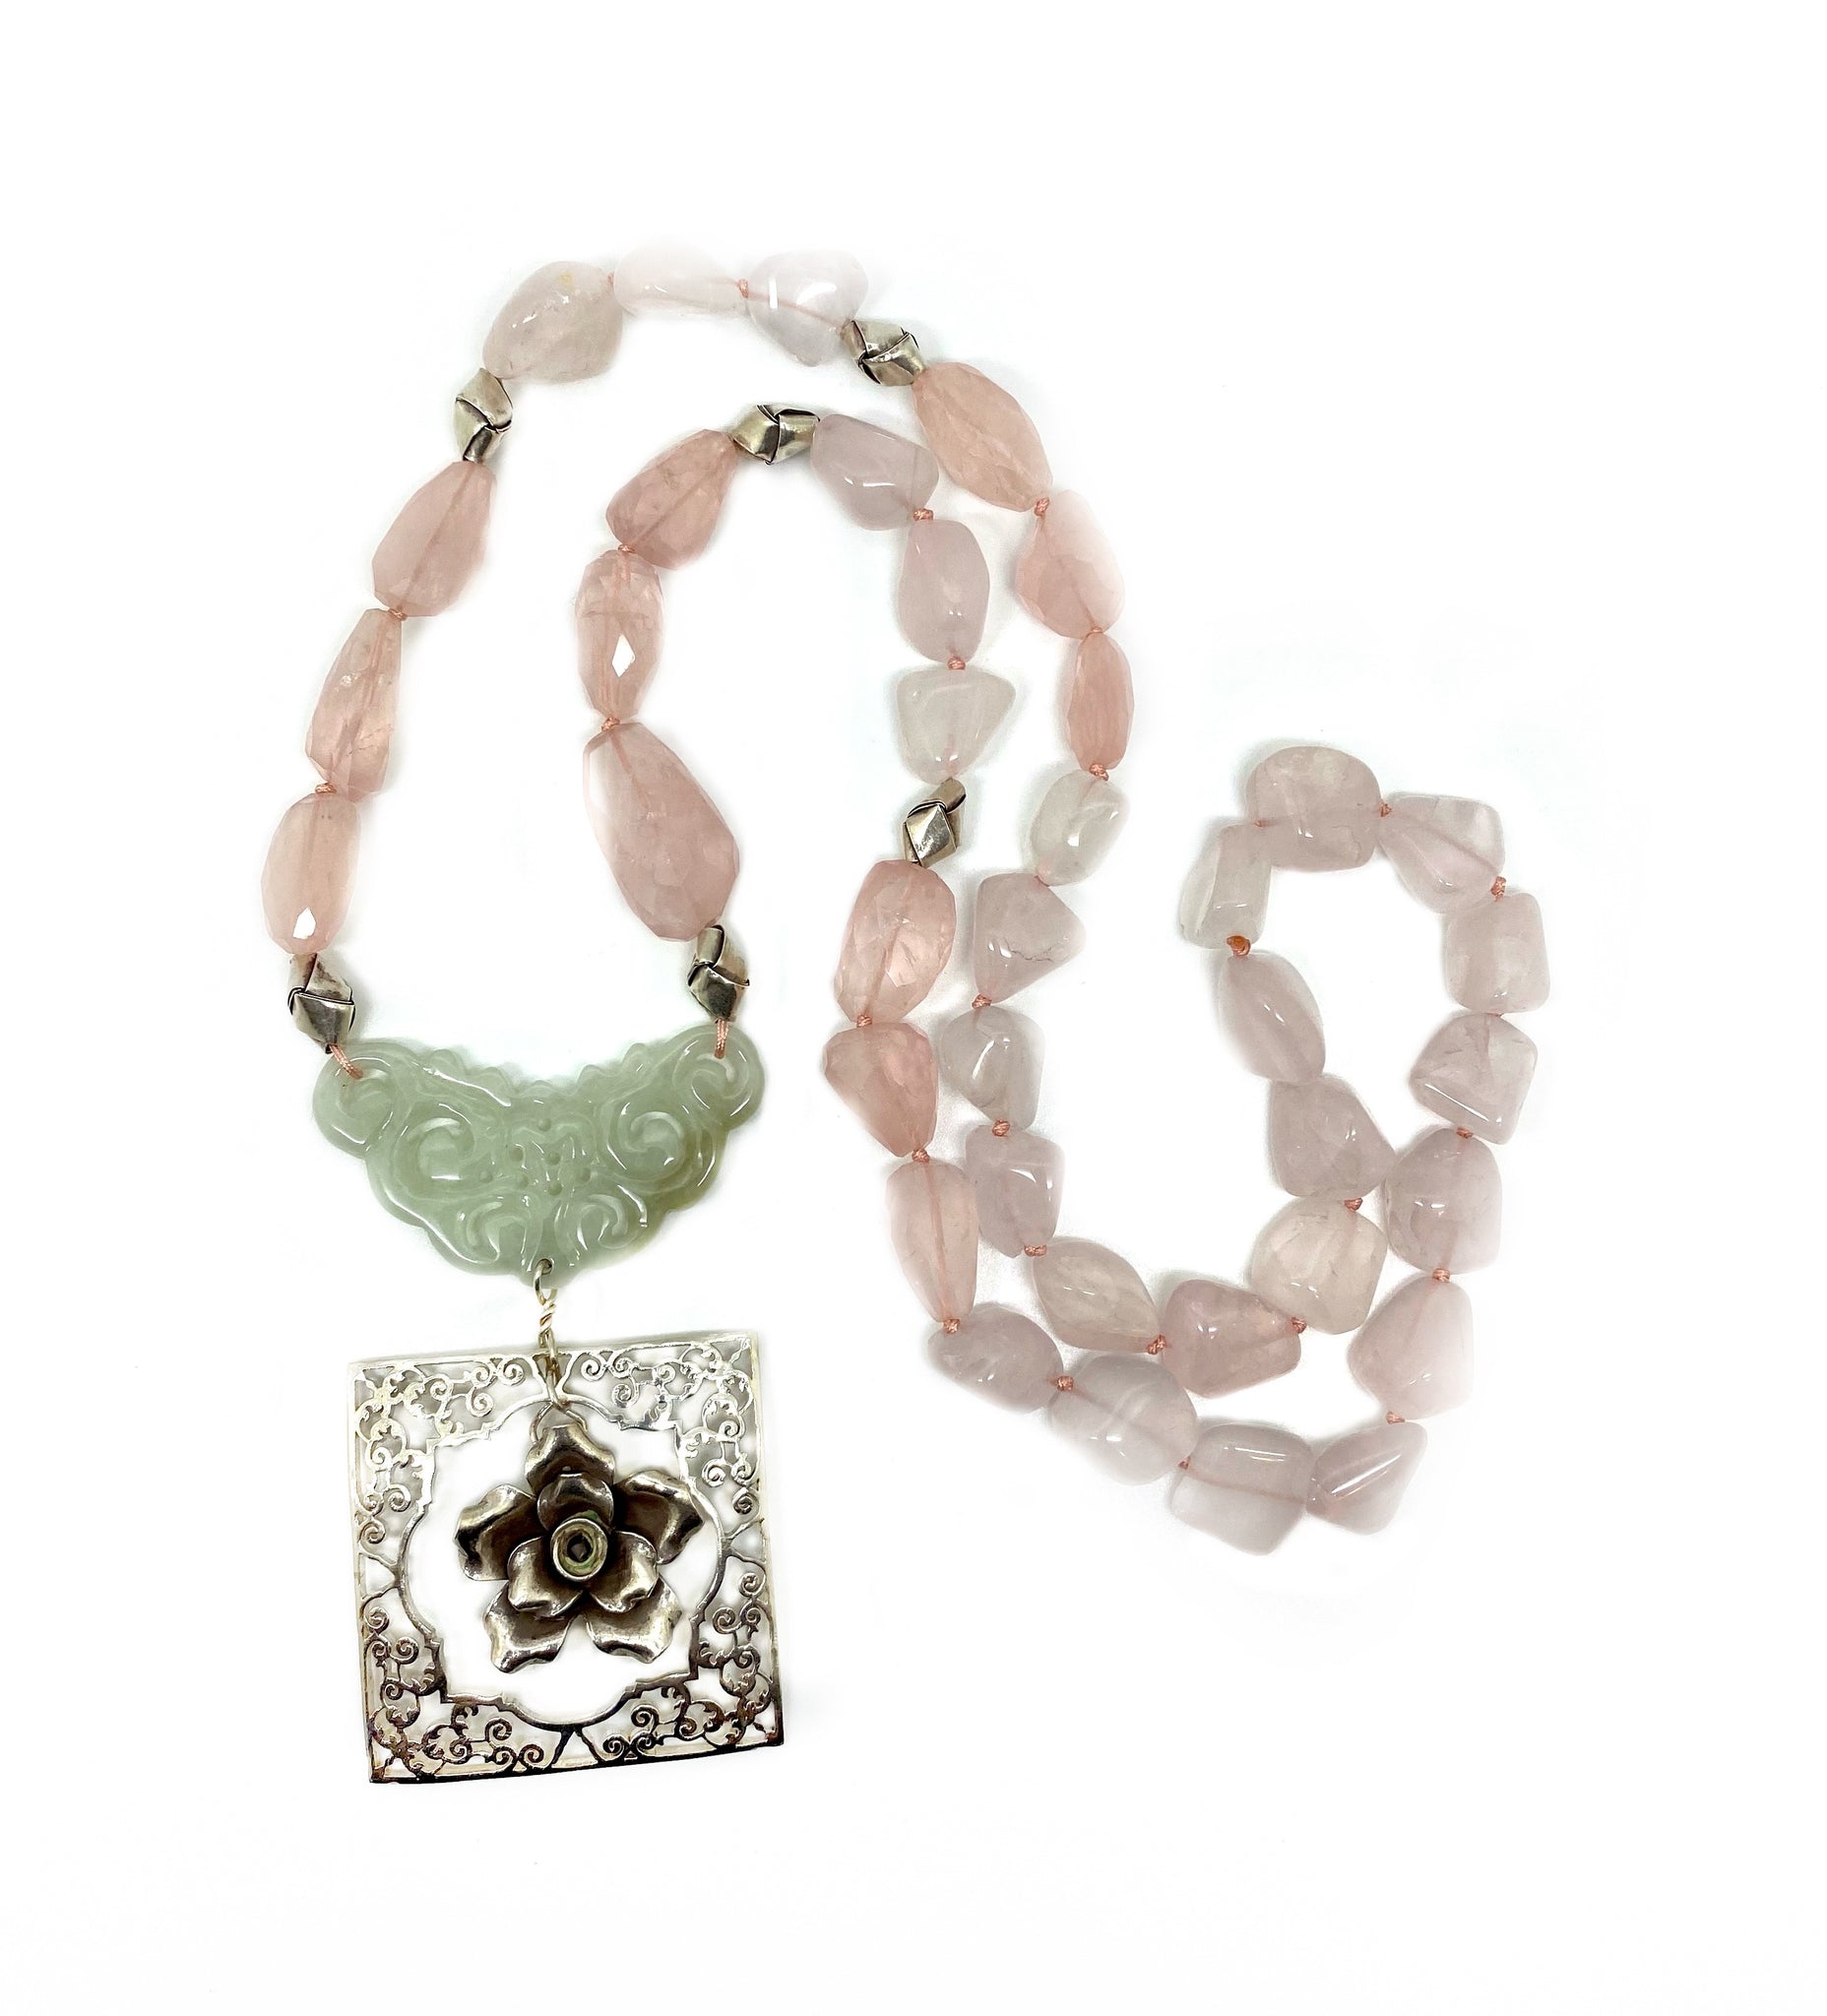 SOLD - NEW - Carved Jade and Rose Quartz necklace